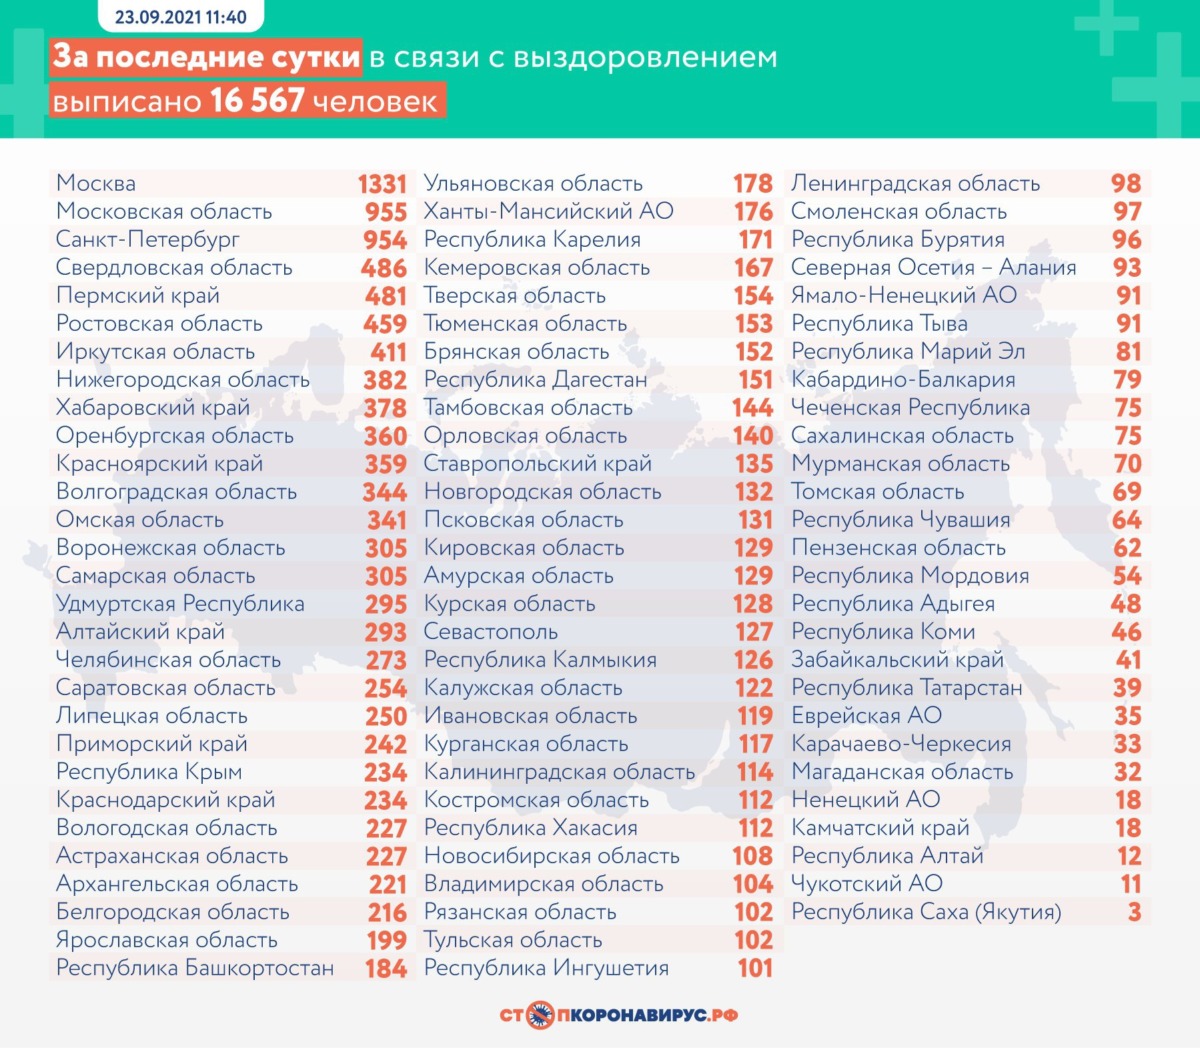 Оперативная статистика по коронавирусу в России на 23 сентября